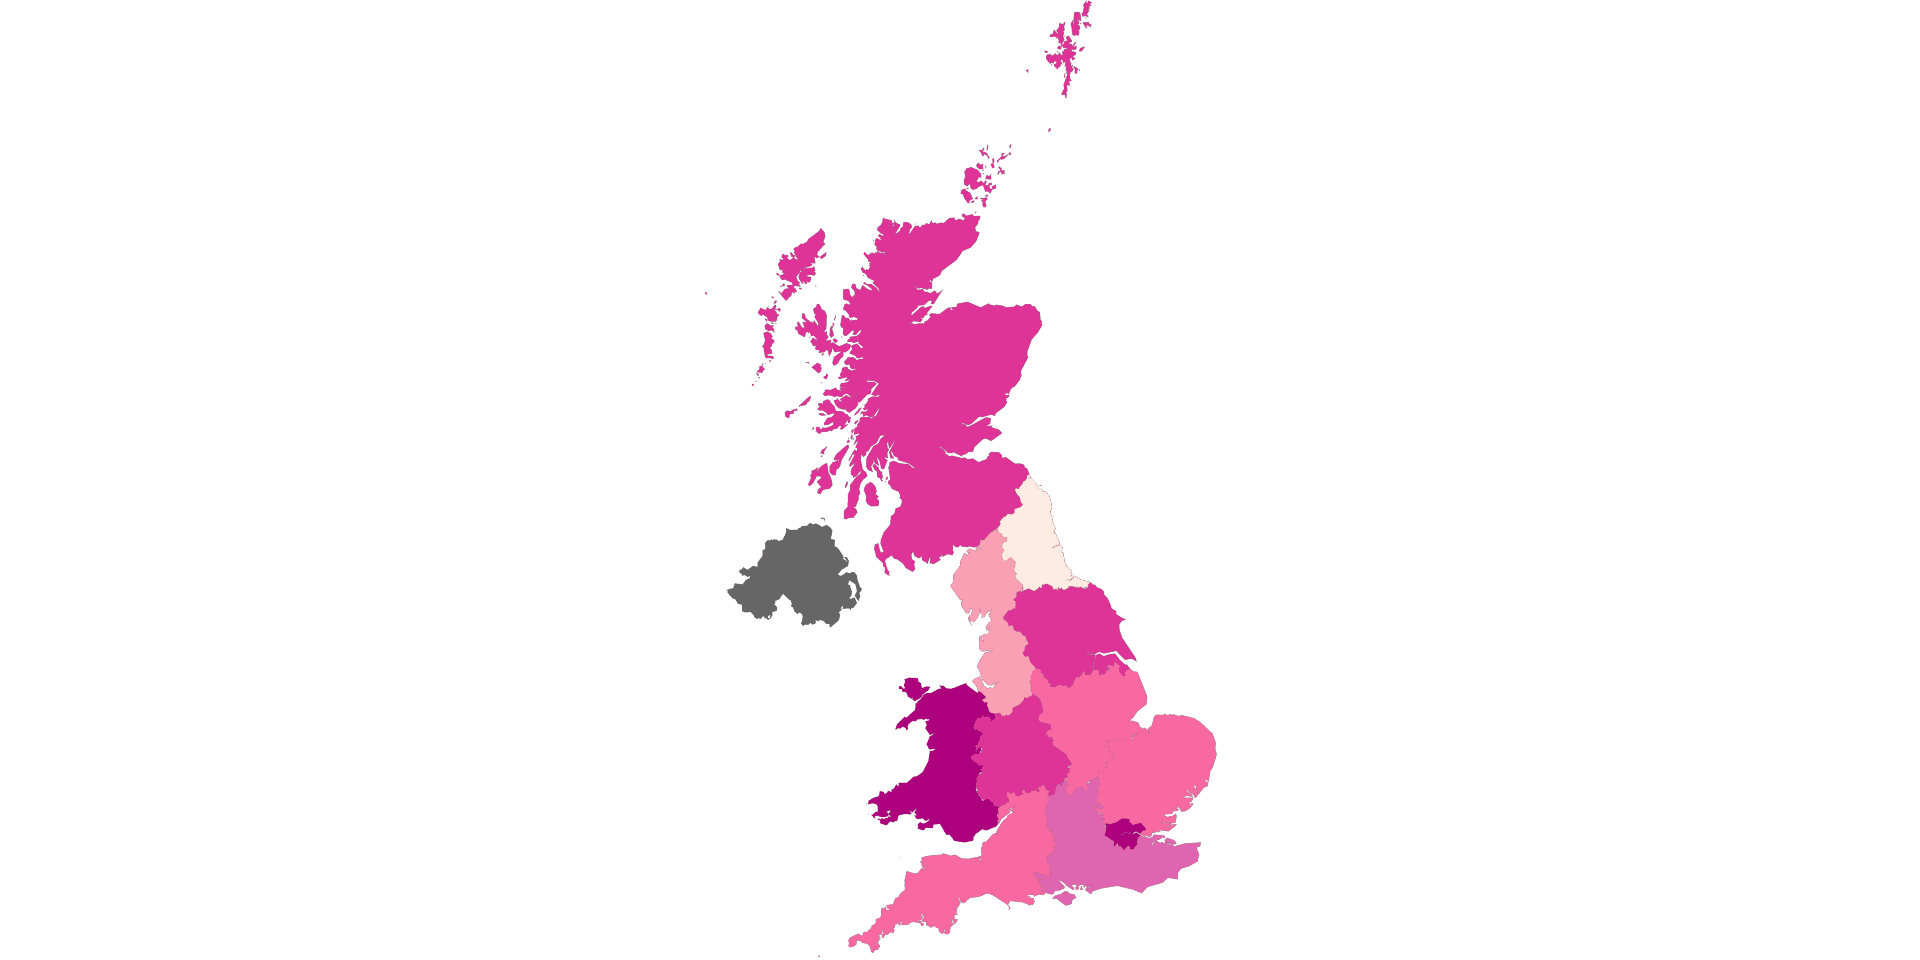 UK Private Rental Price Increases 2016-2023 by Region